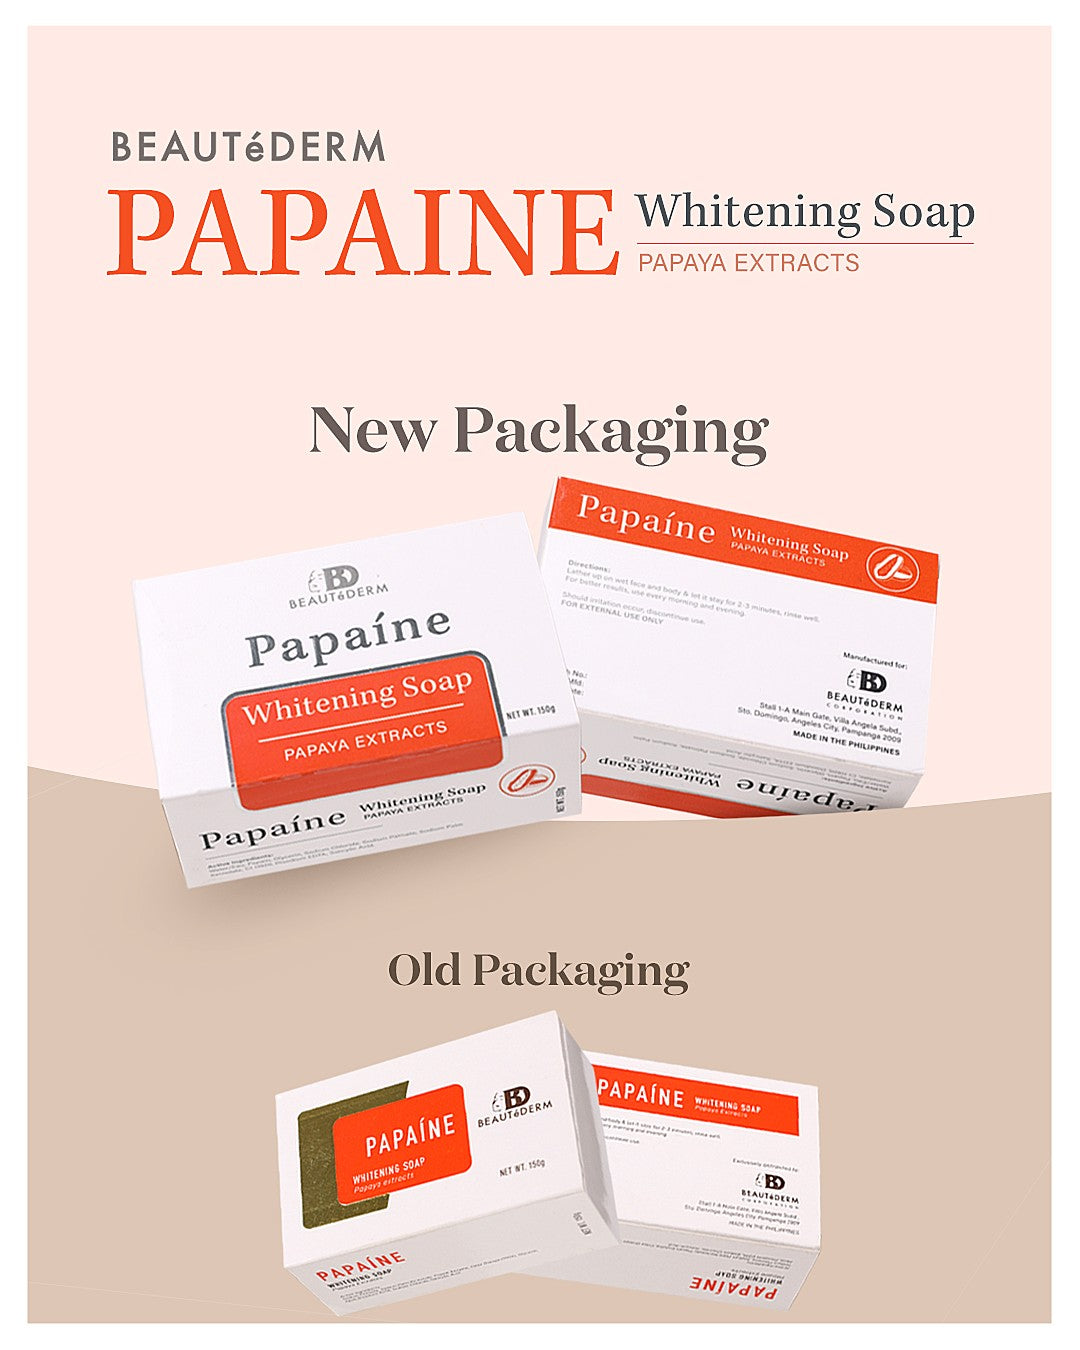 Beautederm Papaine Whitening Soap